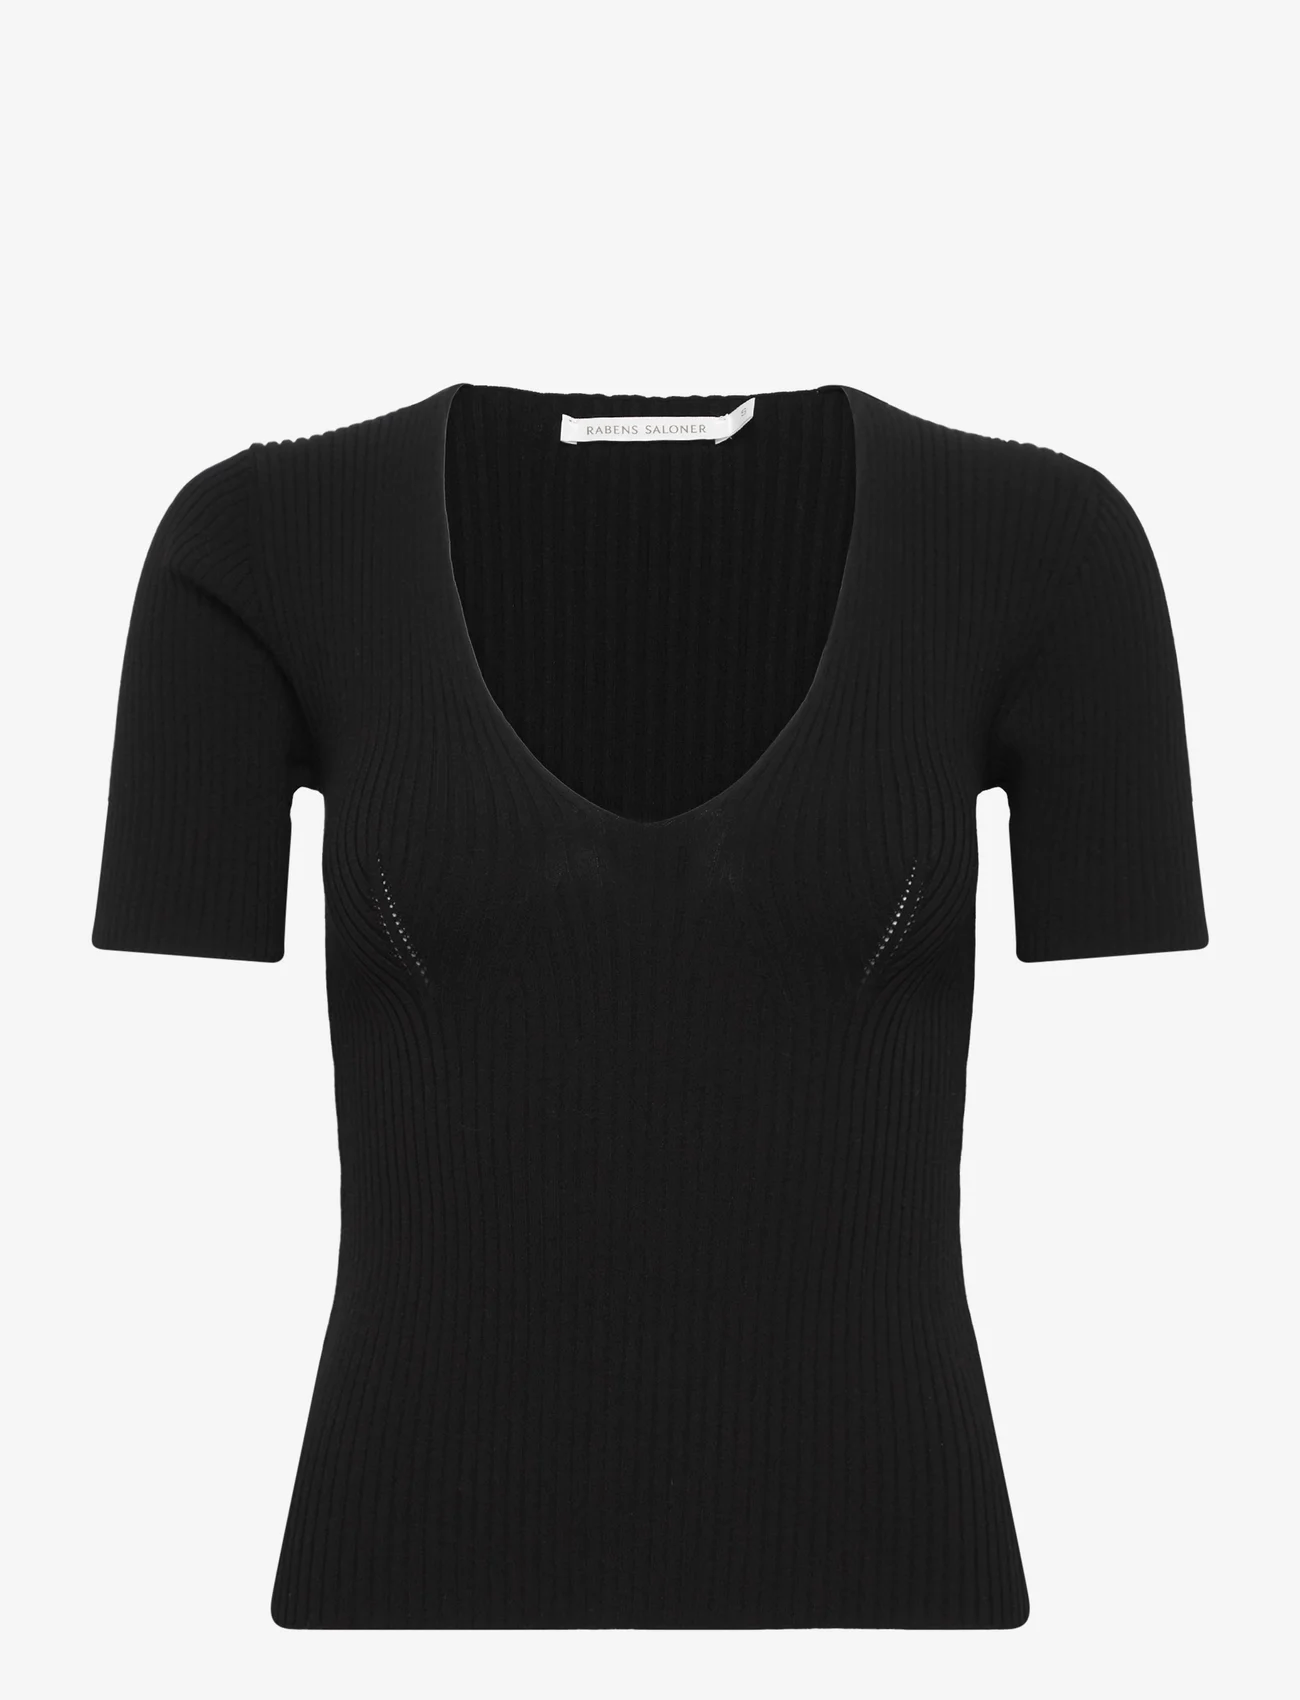 Rabens Saloner - Fabia - Contour knit short slv. top - t-shirts & tops - black - 0